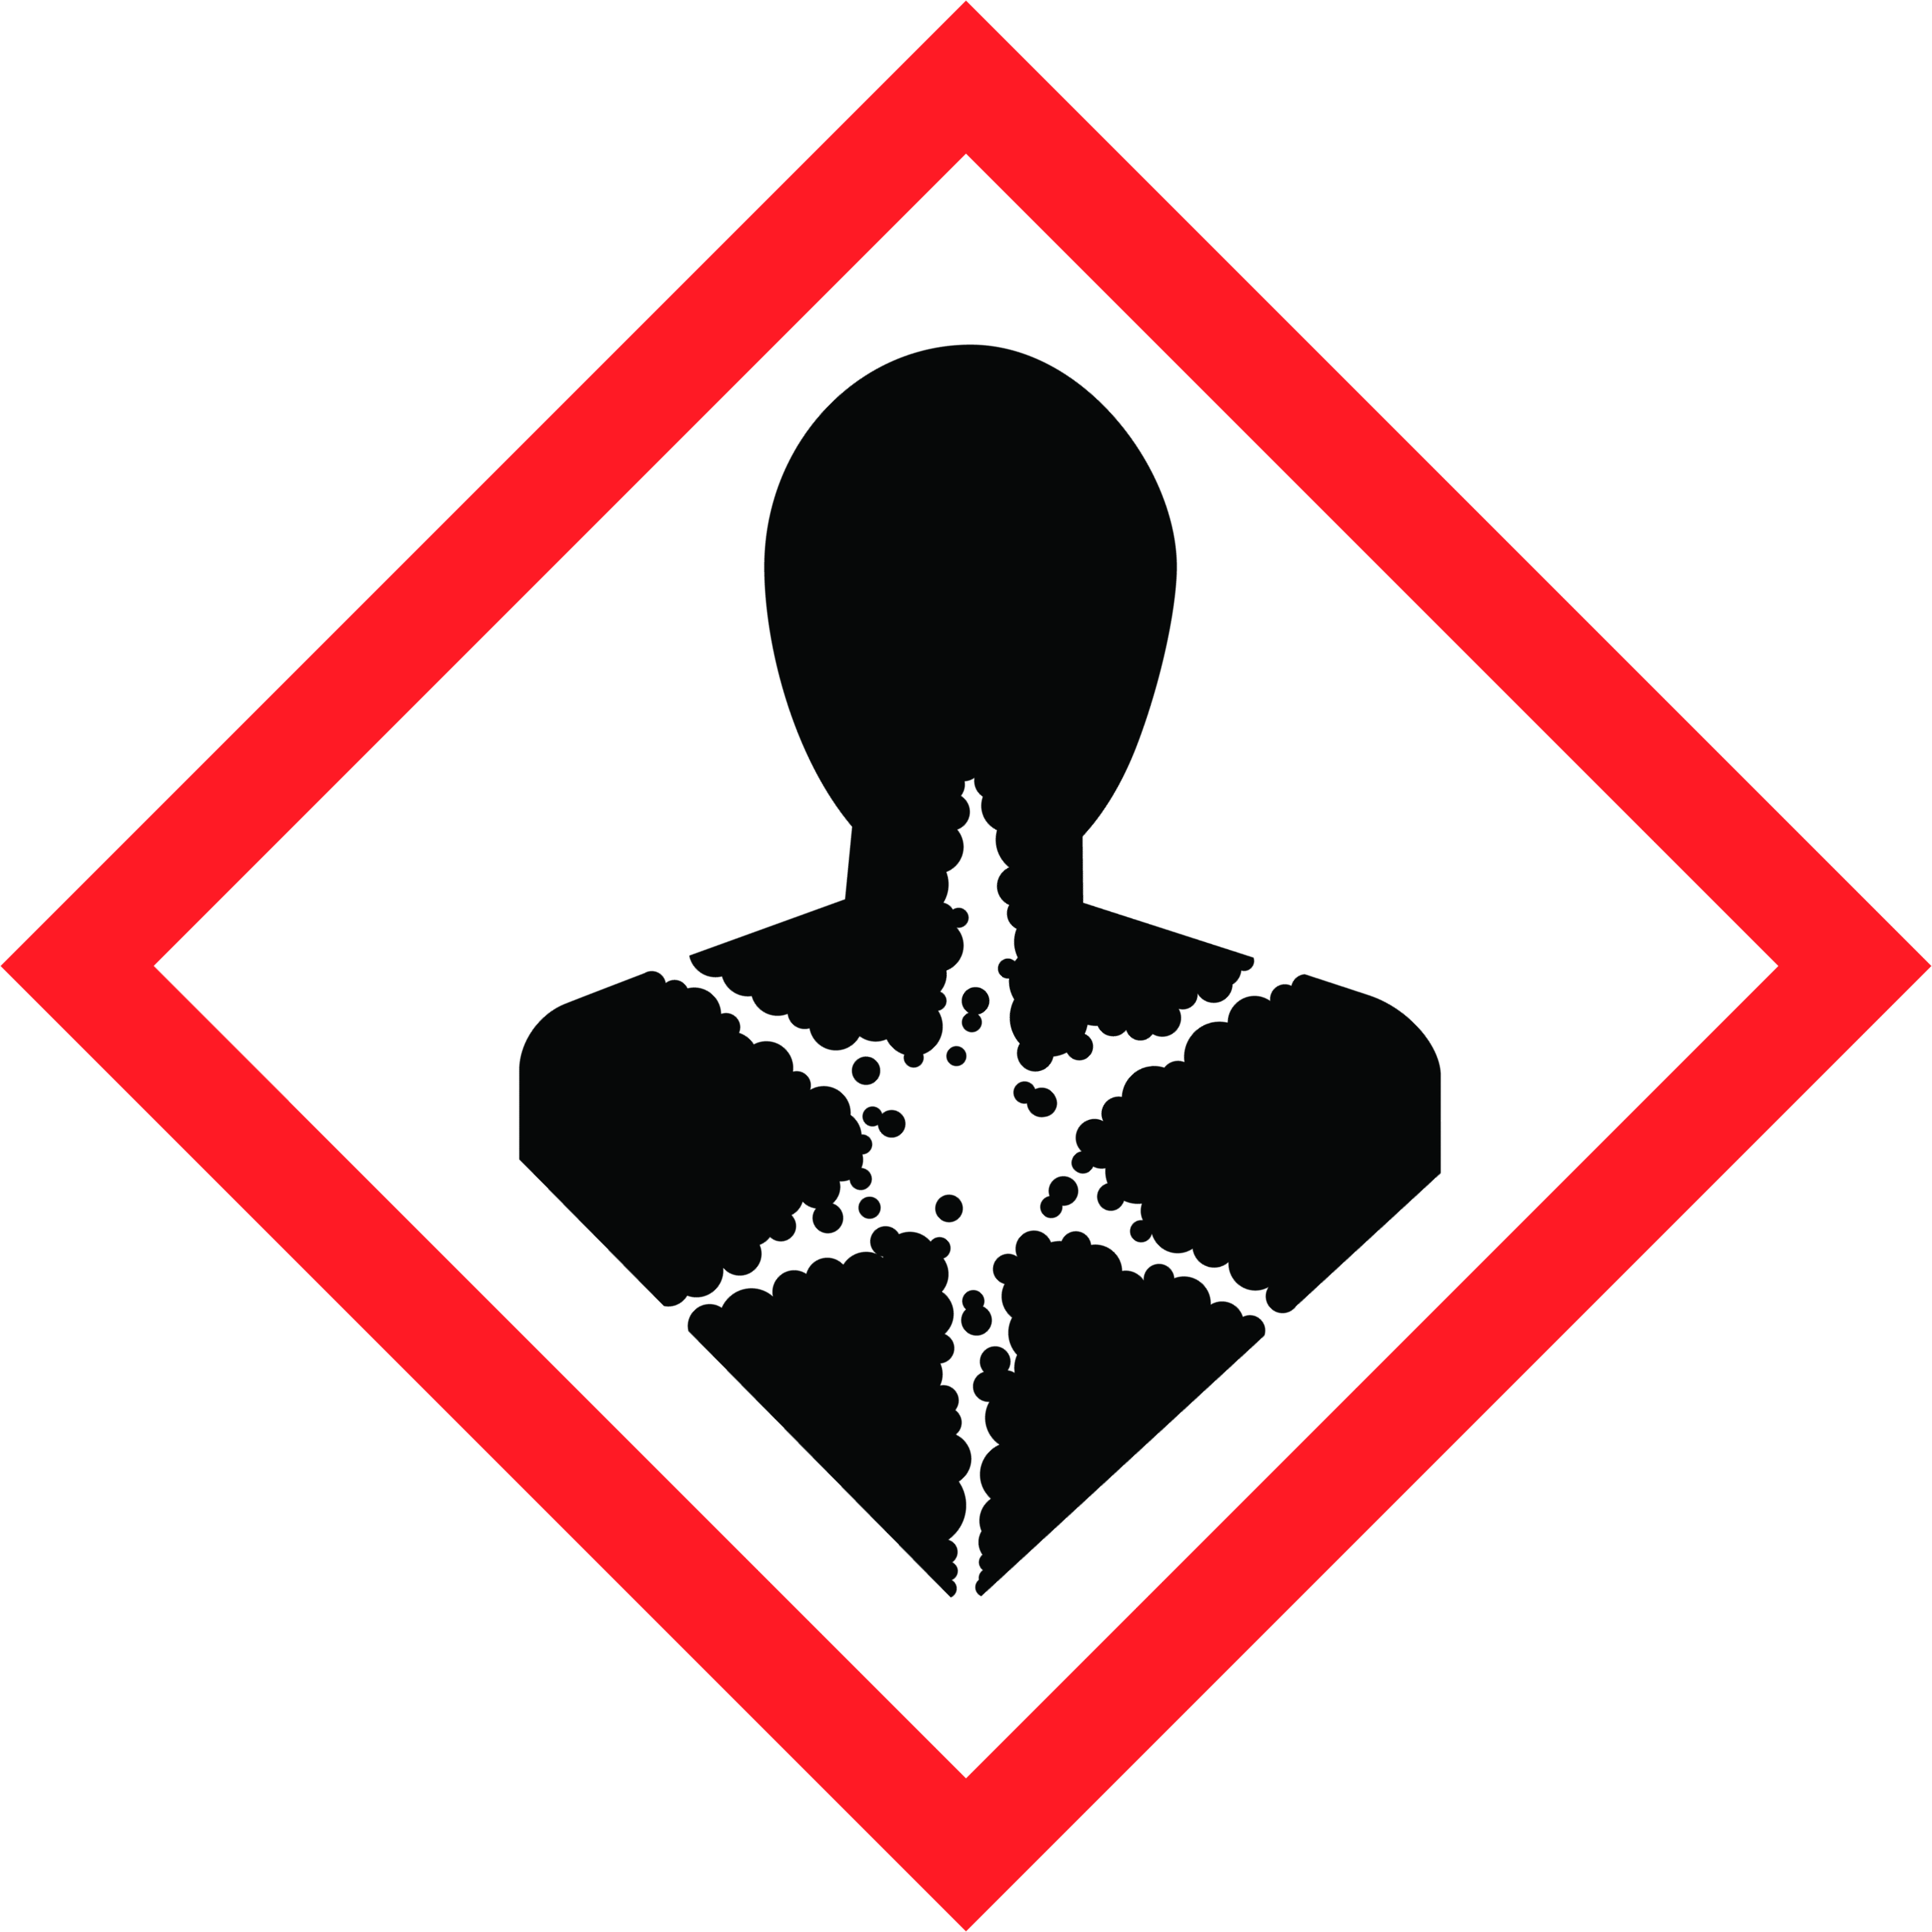 Safety Image